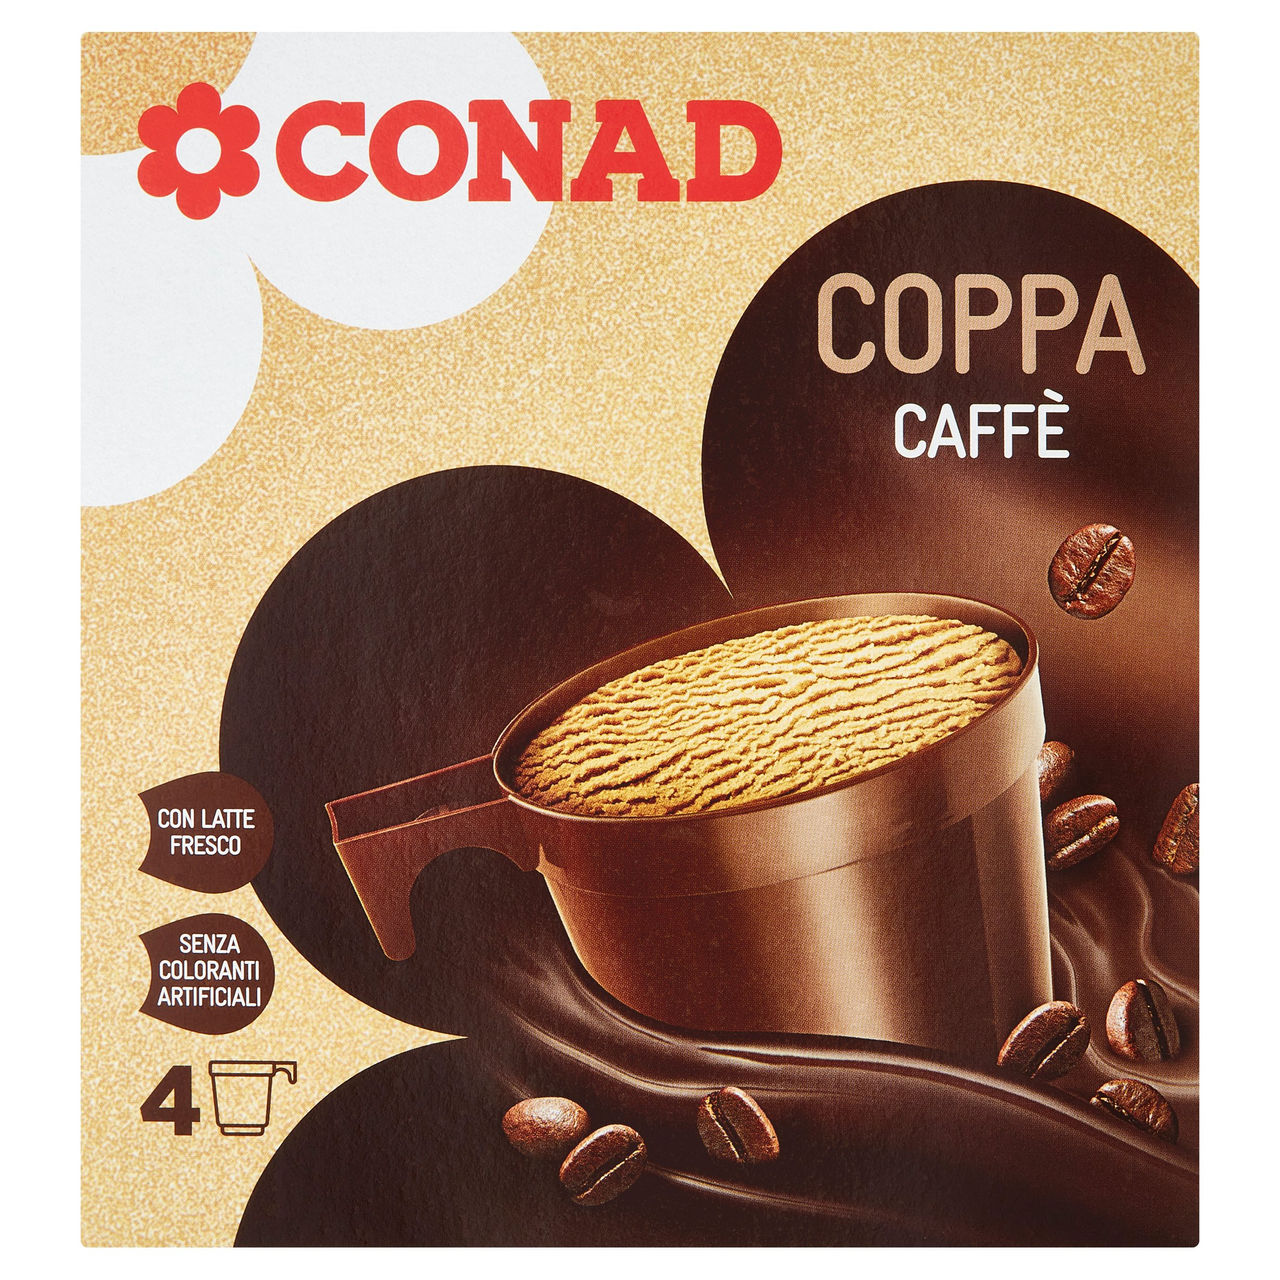 Coppa Caffè 4 x 70 g Conad in vendita online